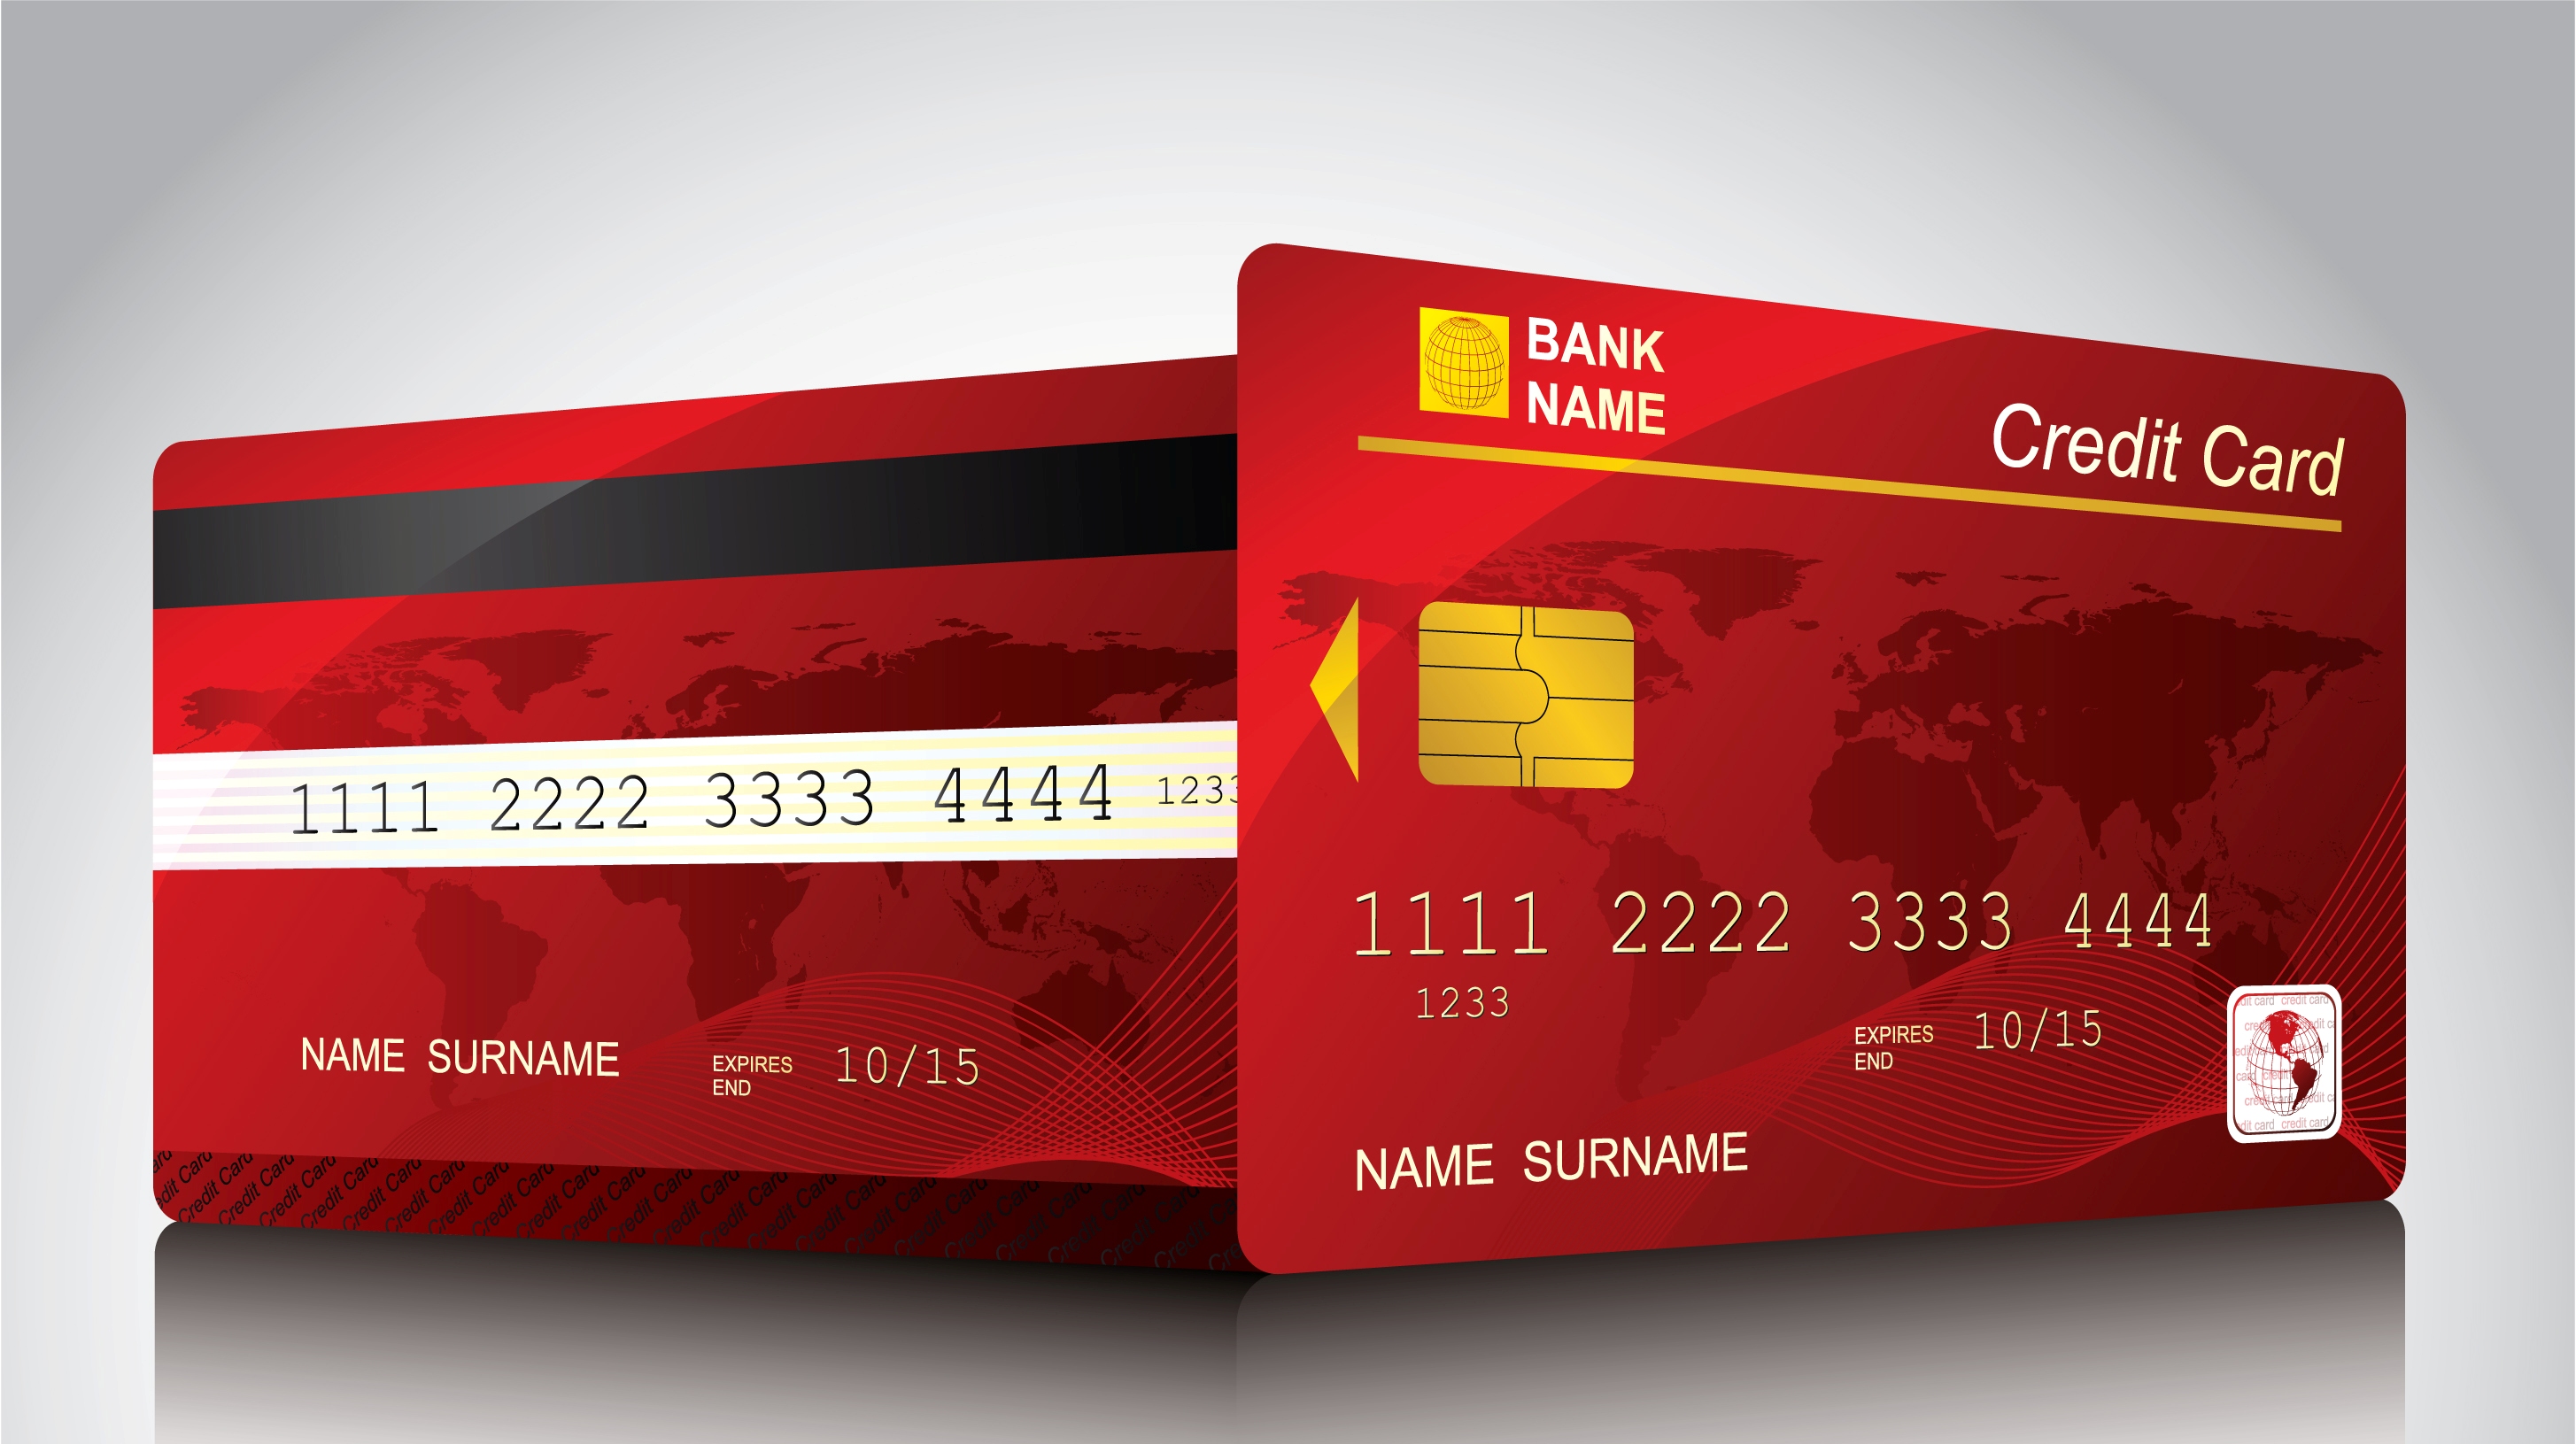 Bank Cards Card USA Inc Card Manufacturing Card Technology Experts